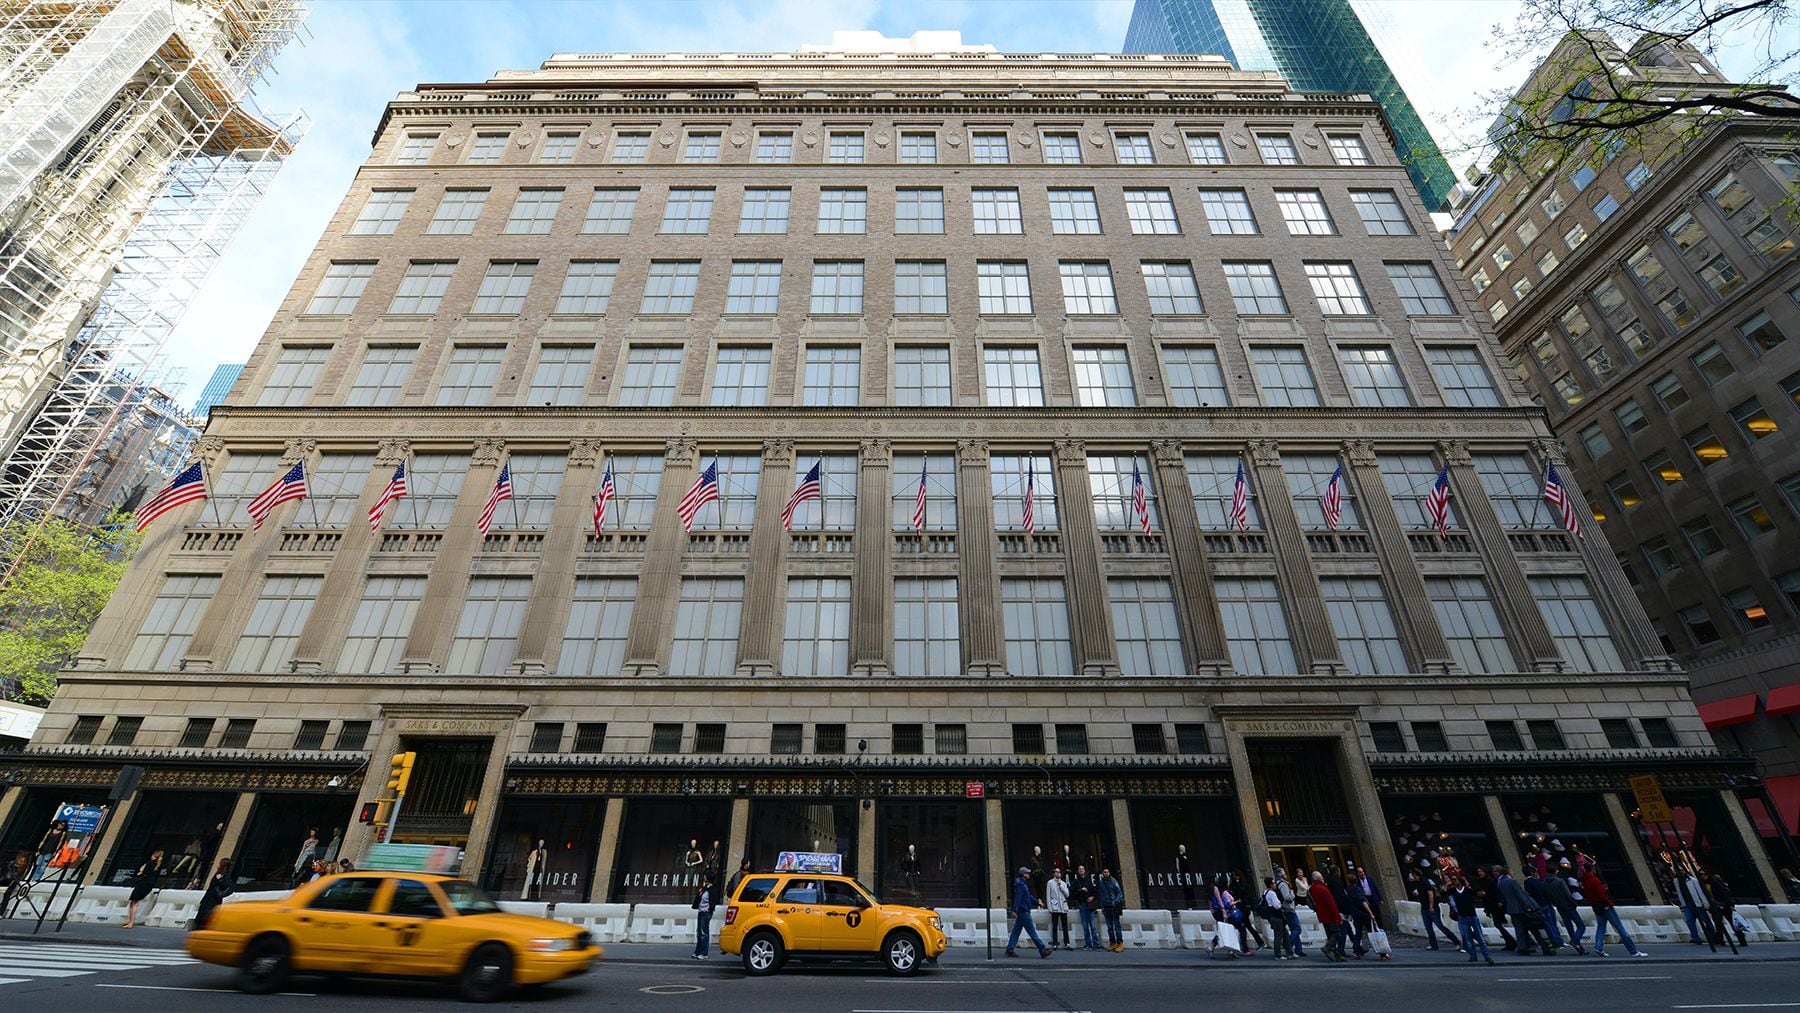 Saks Fifth Avenue Flagship Appraised at $3.6 Billion as It Renews Neiman Push